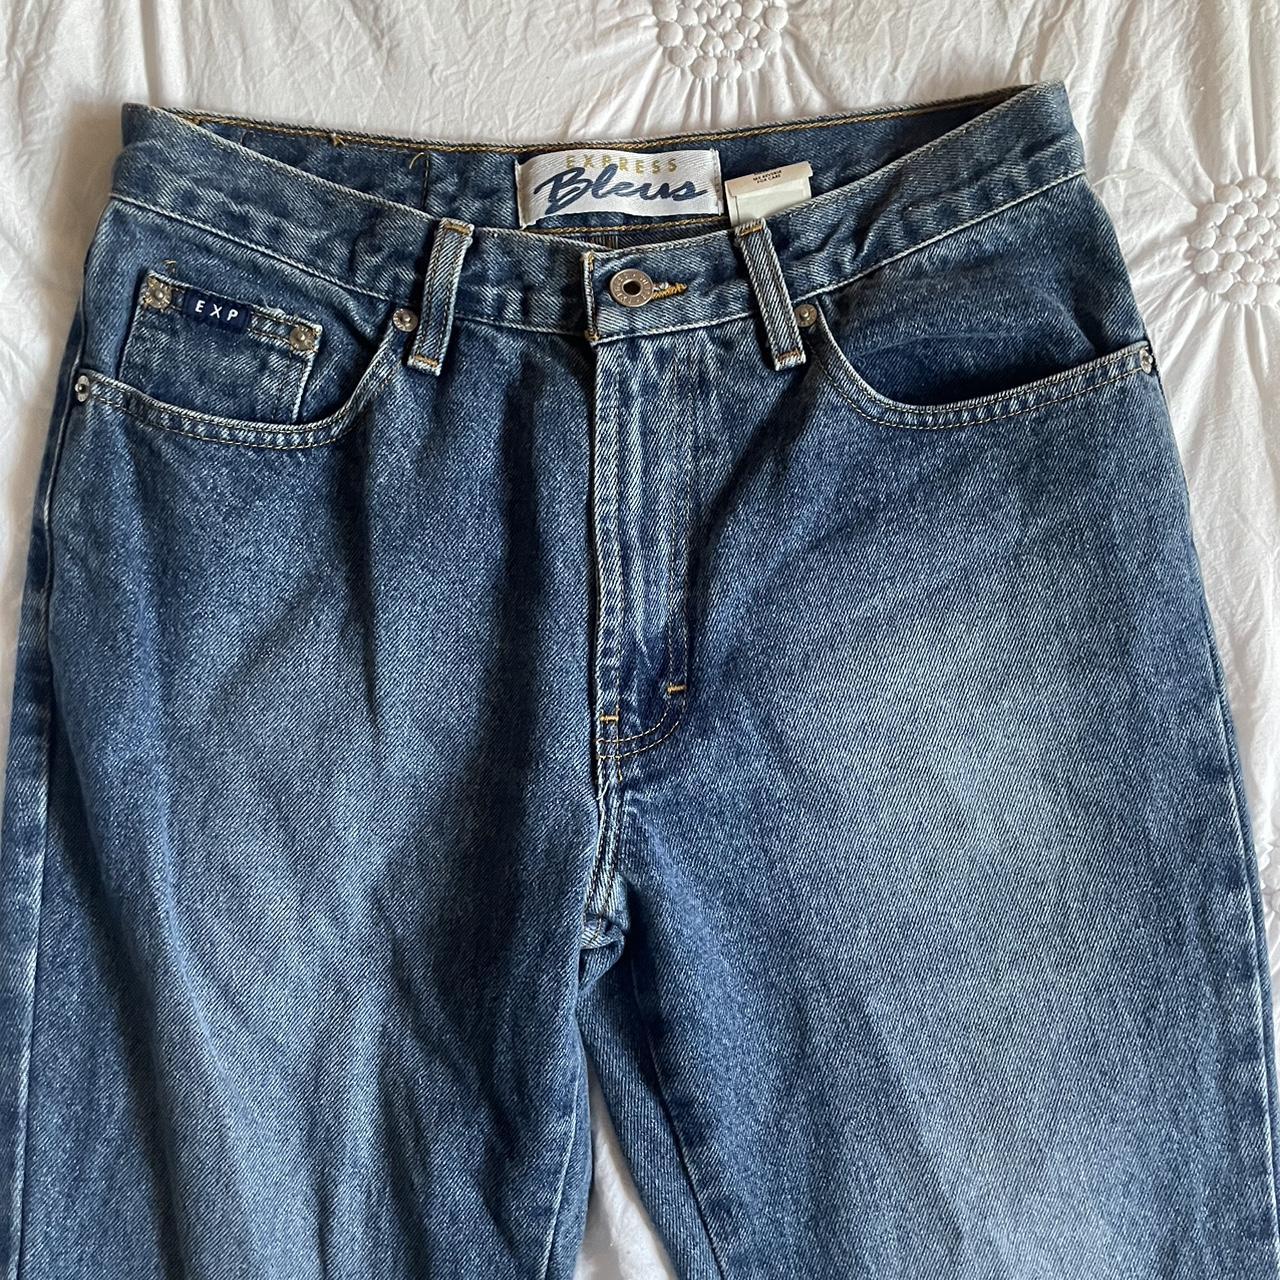 Express Bleus Denim Flare Jeans Labeled as size 5/6... - Depop